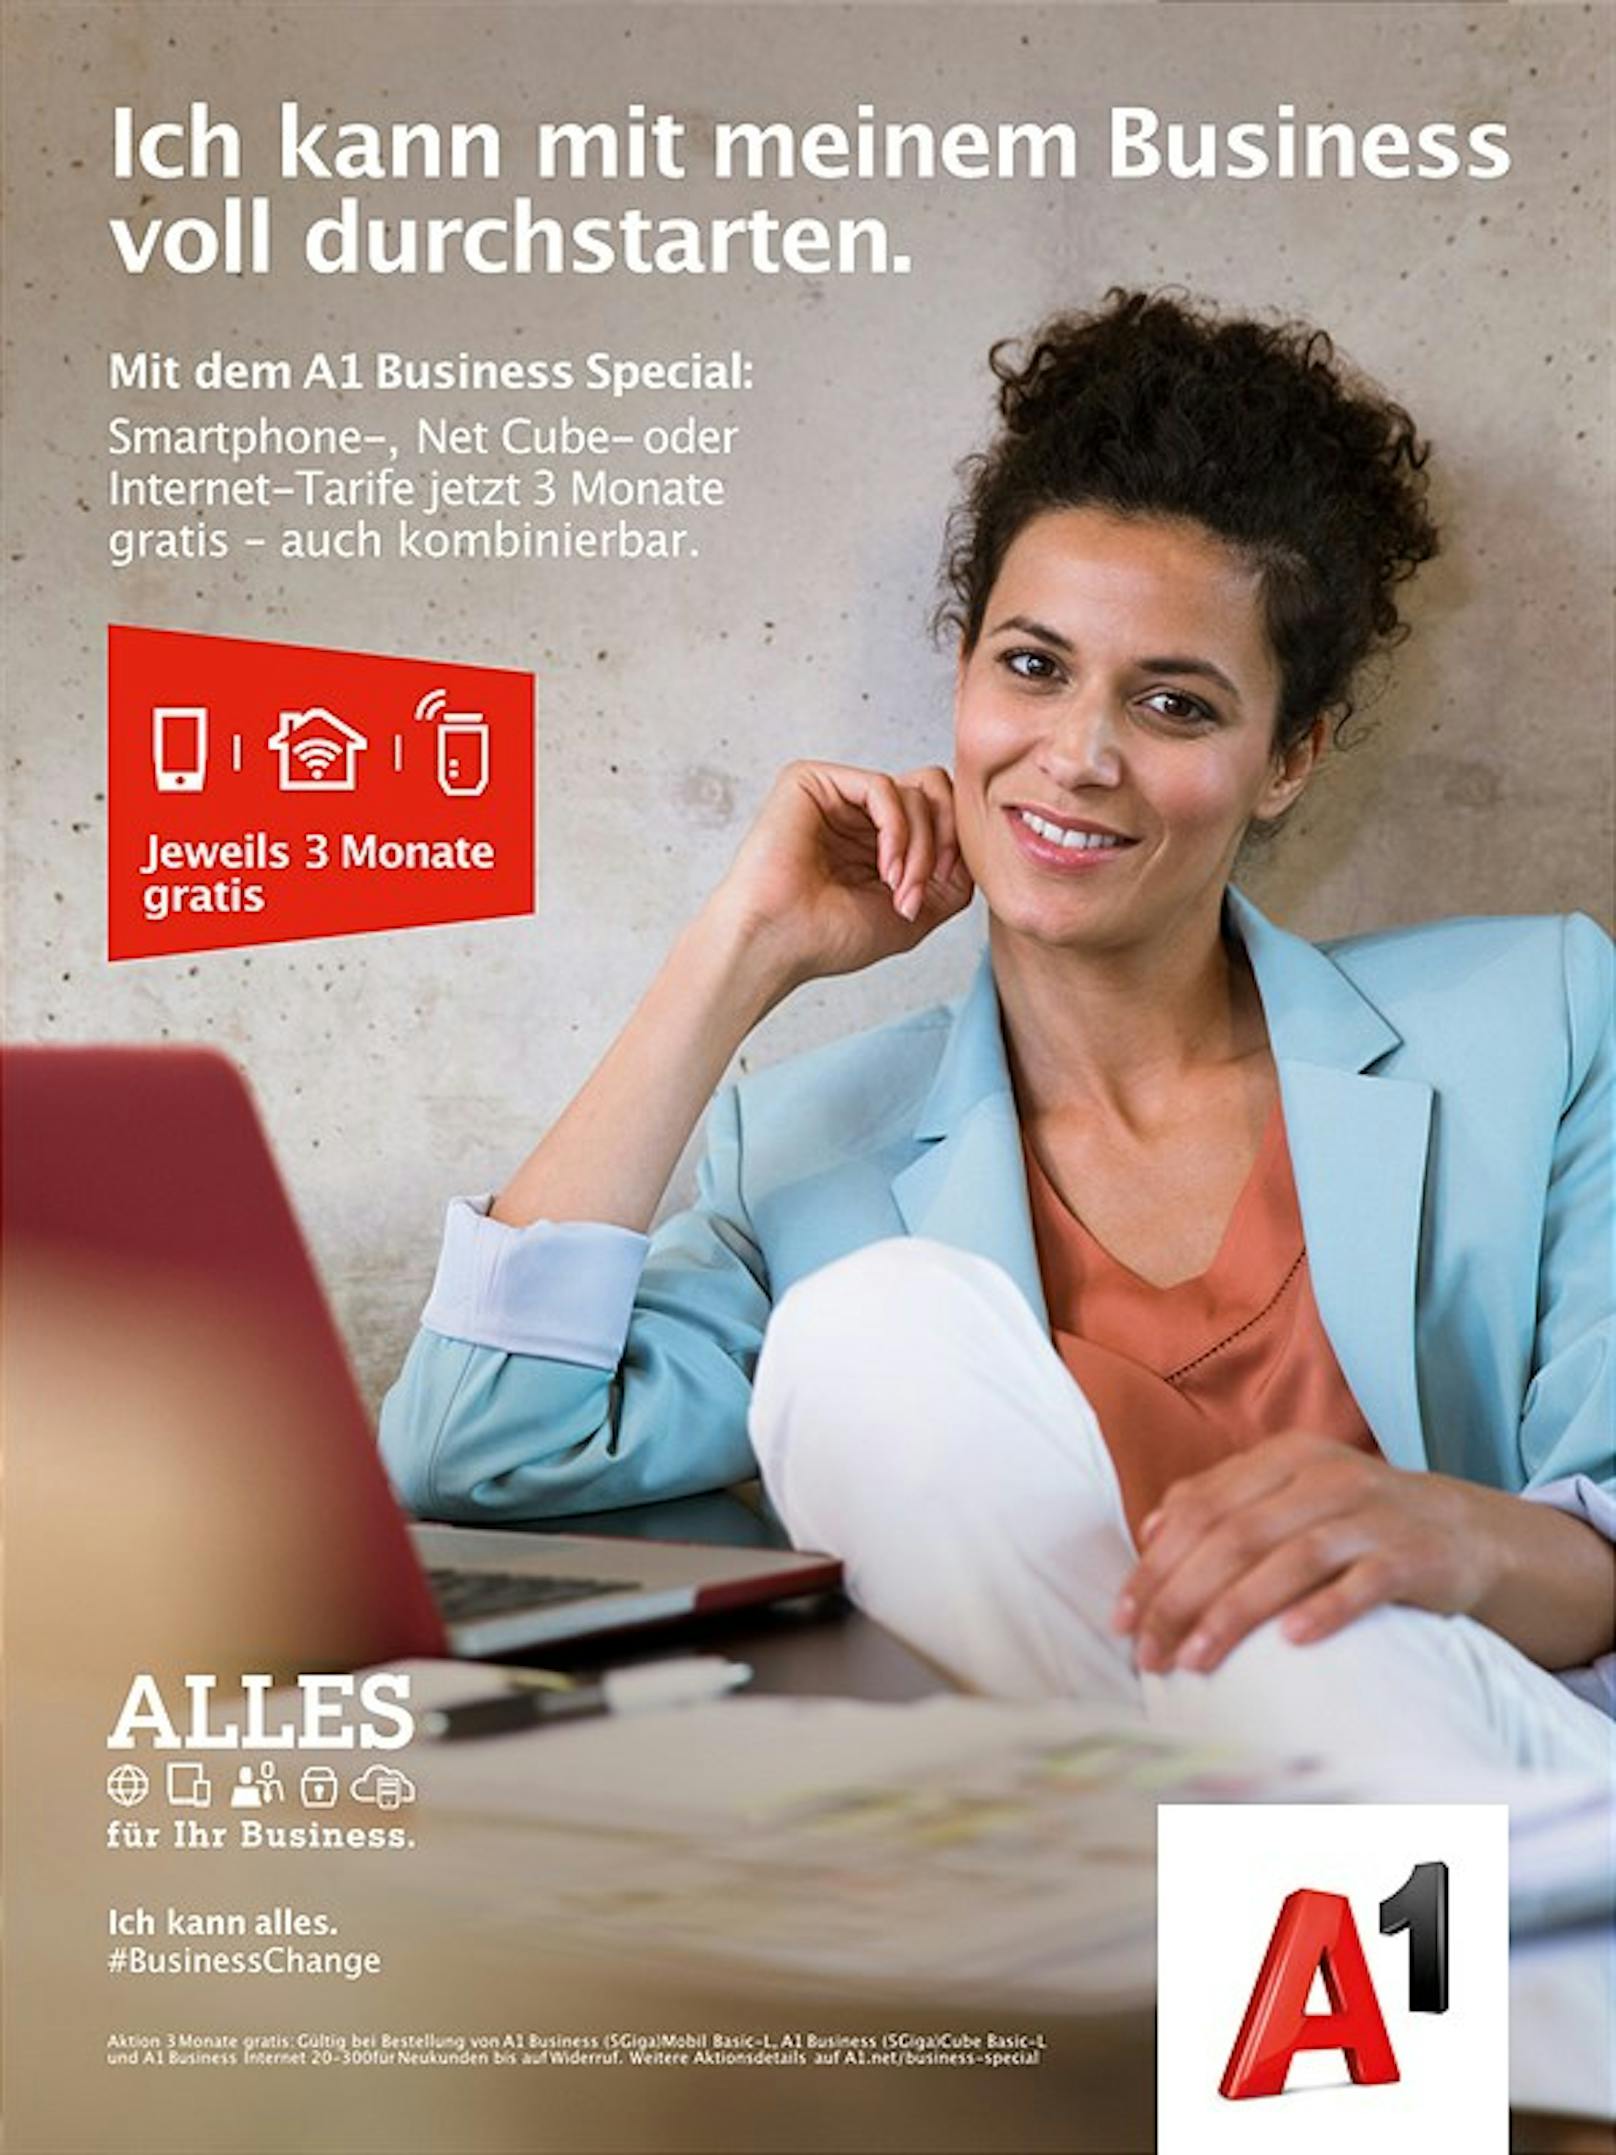 A1 Business Special: Smartphone, Net Cube- oder Internet-Tarife jetzt 3 Monate gratis.